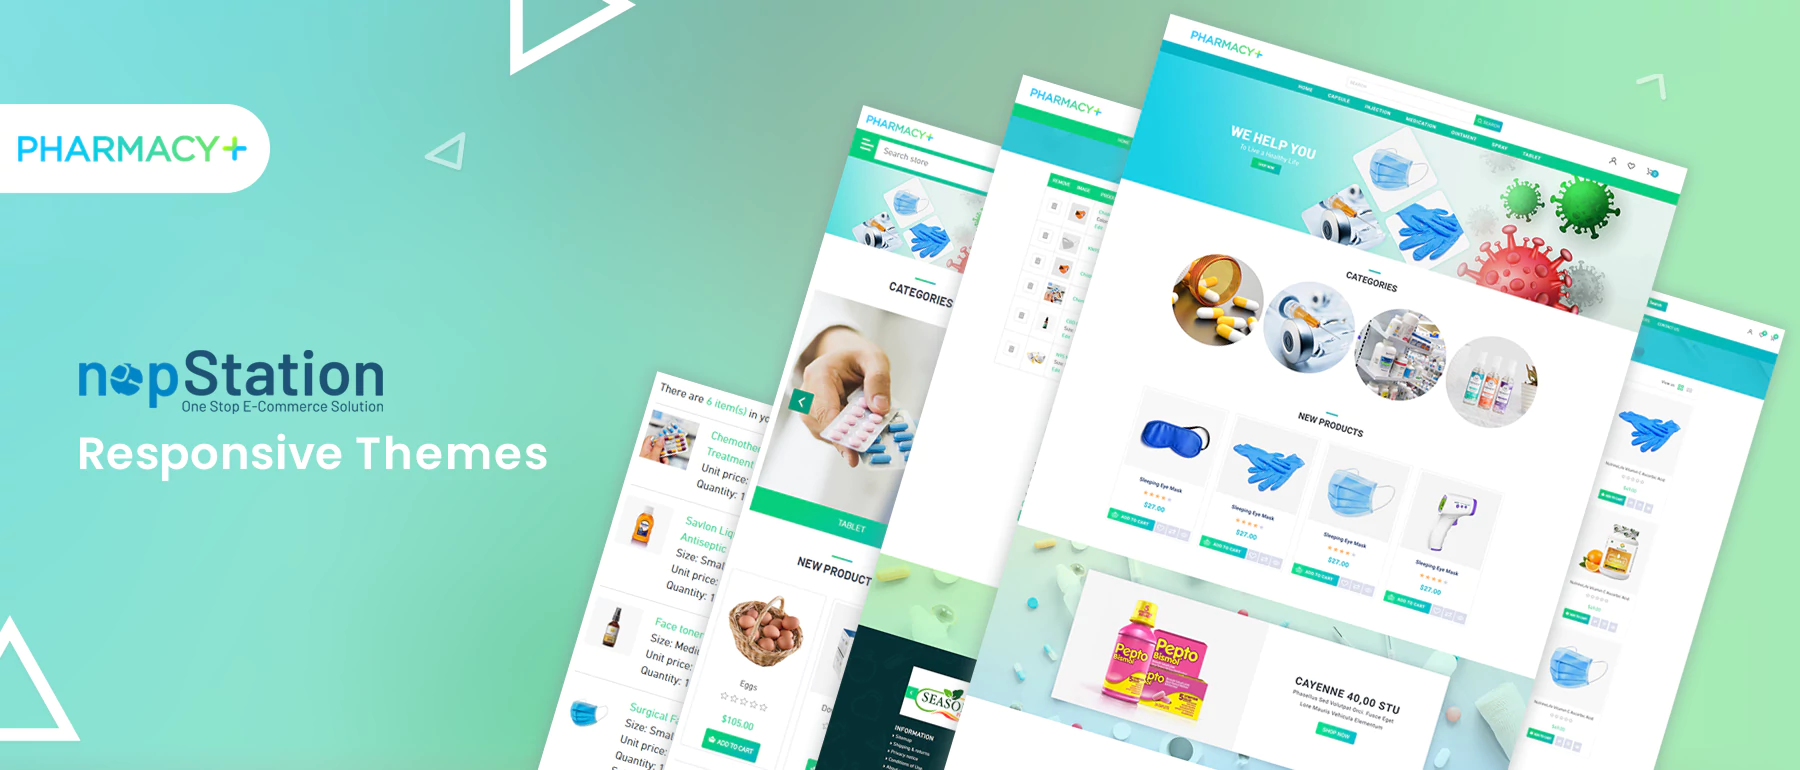 pharmacy-homepage-view